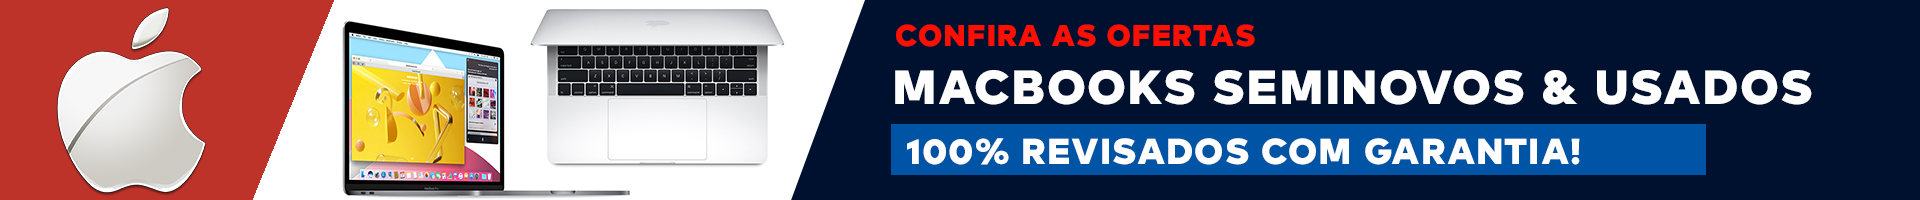 catalogo-macbook